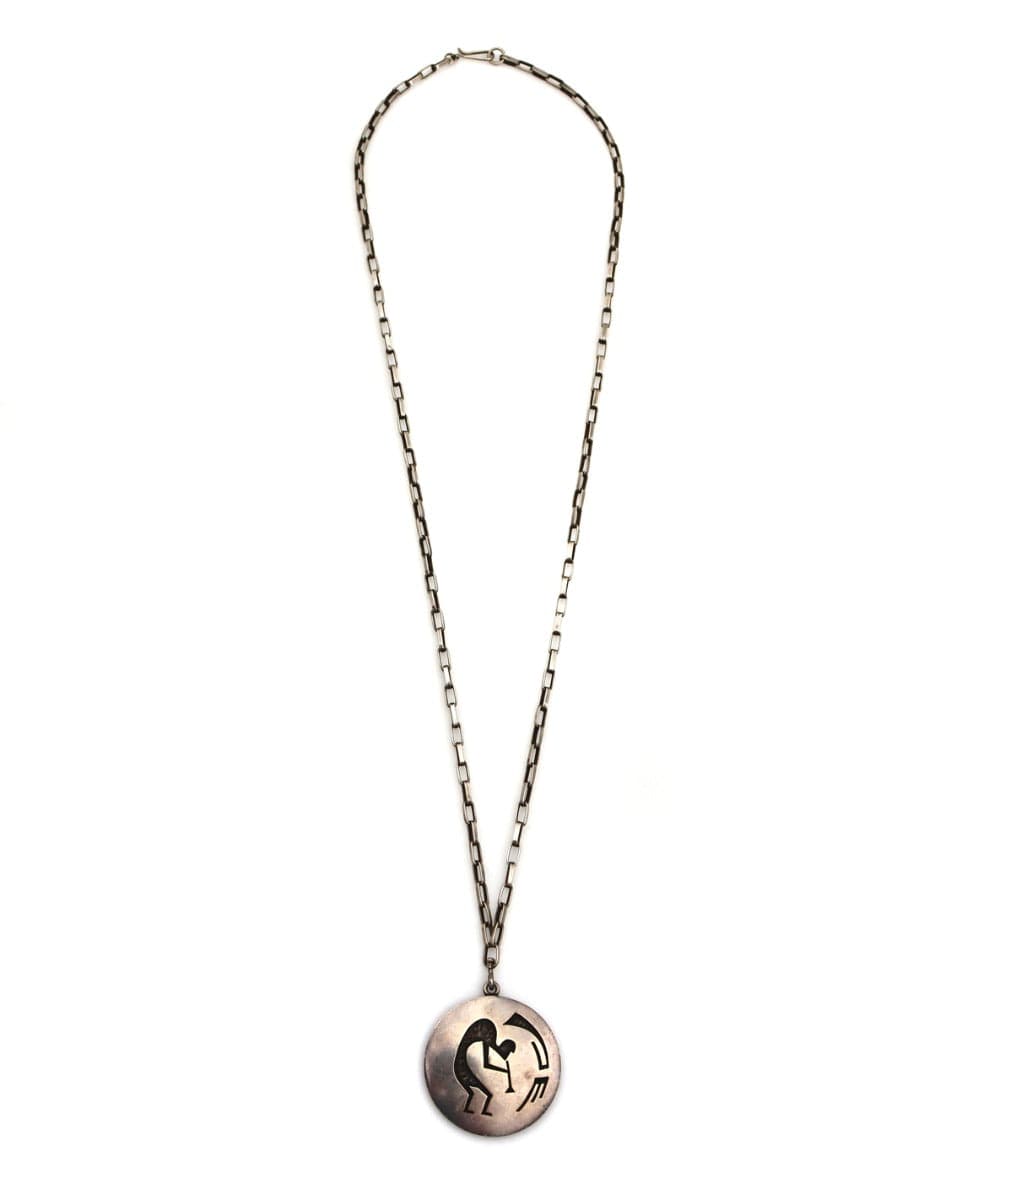 Hopi Silver Overlay Pendant with Handmade Silver Chain c. 1960s, 30" length, 1.75" pendant (J13430)
